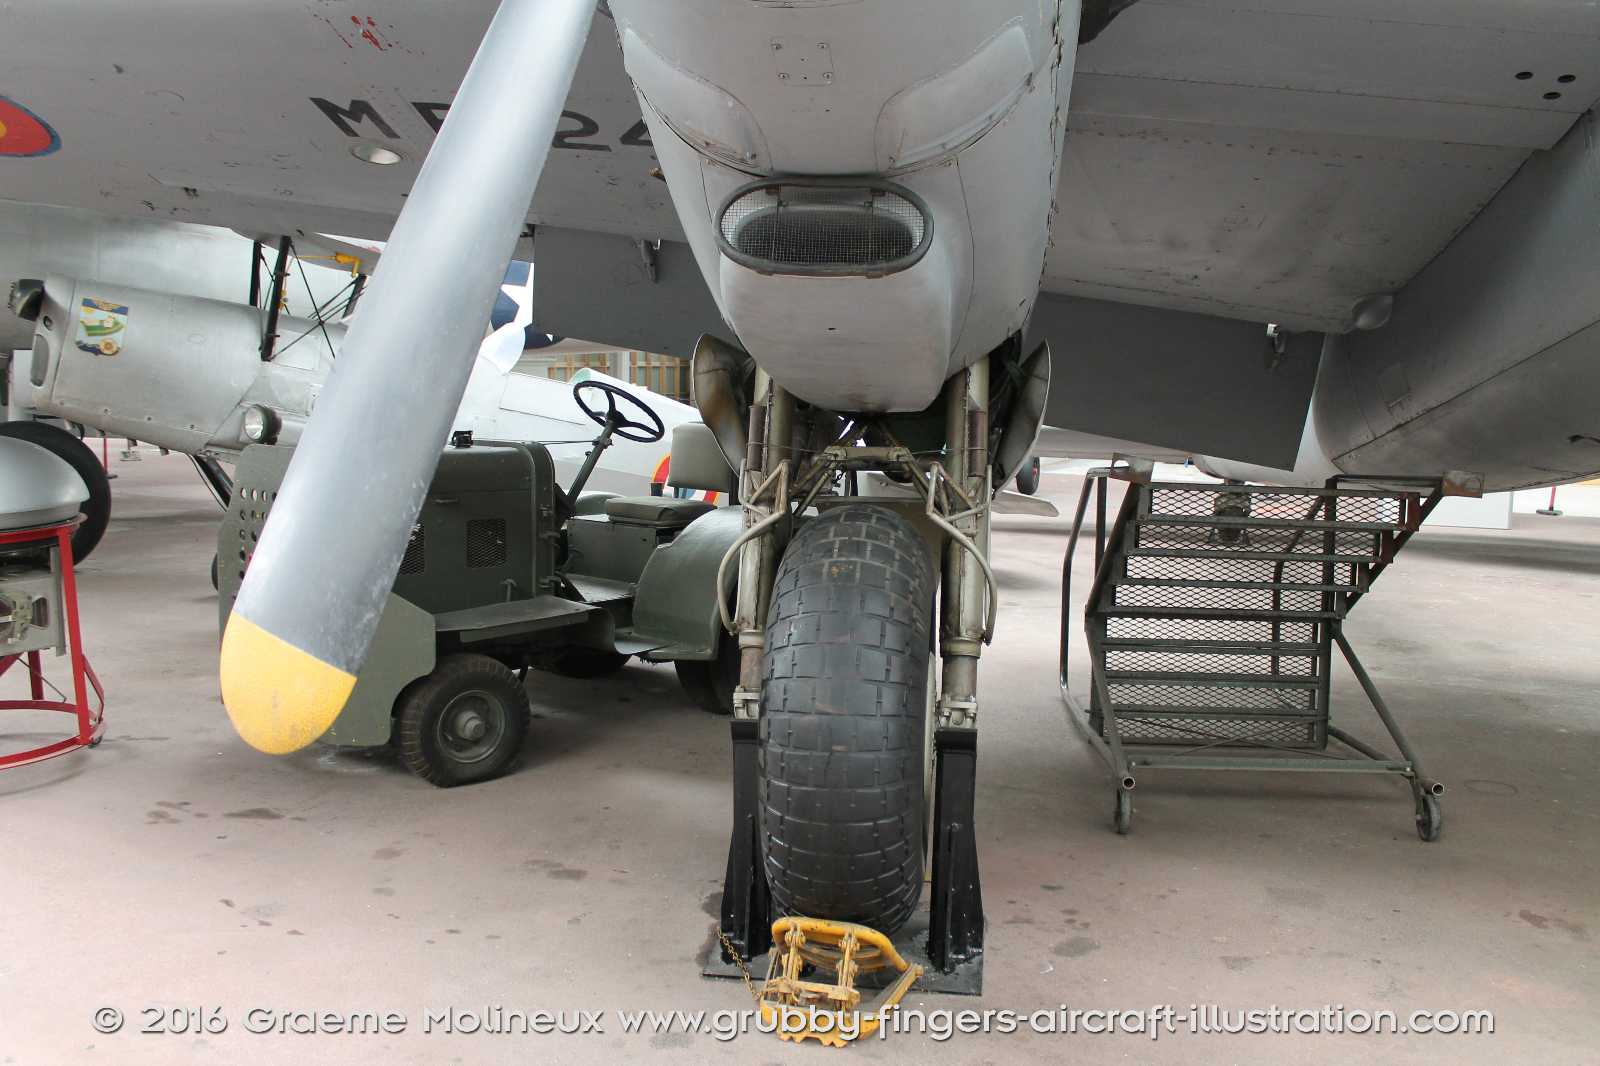 de_Havilland_Mosquito_Walkaround_Mk30_MB-42_Belgian_Air_Force_Museum_2015_21_GraemeMolineux